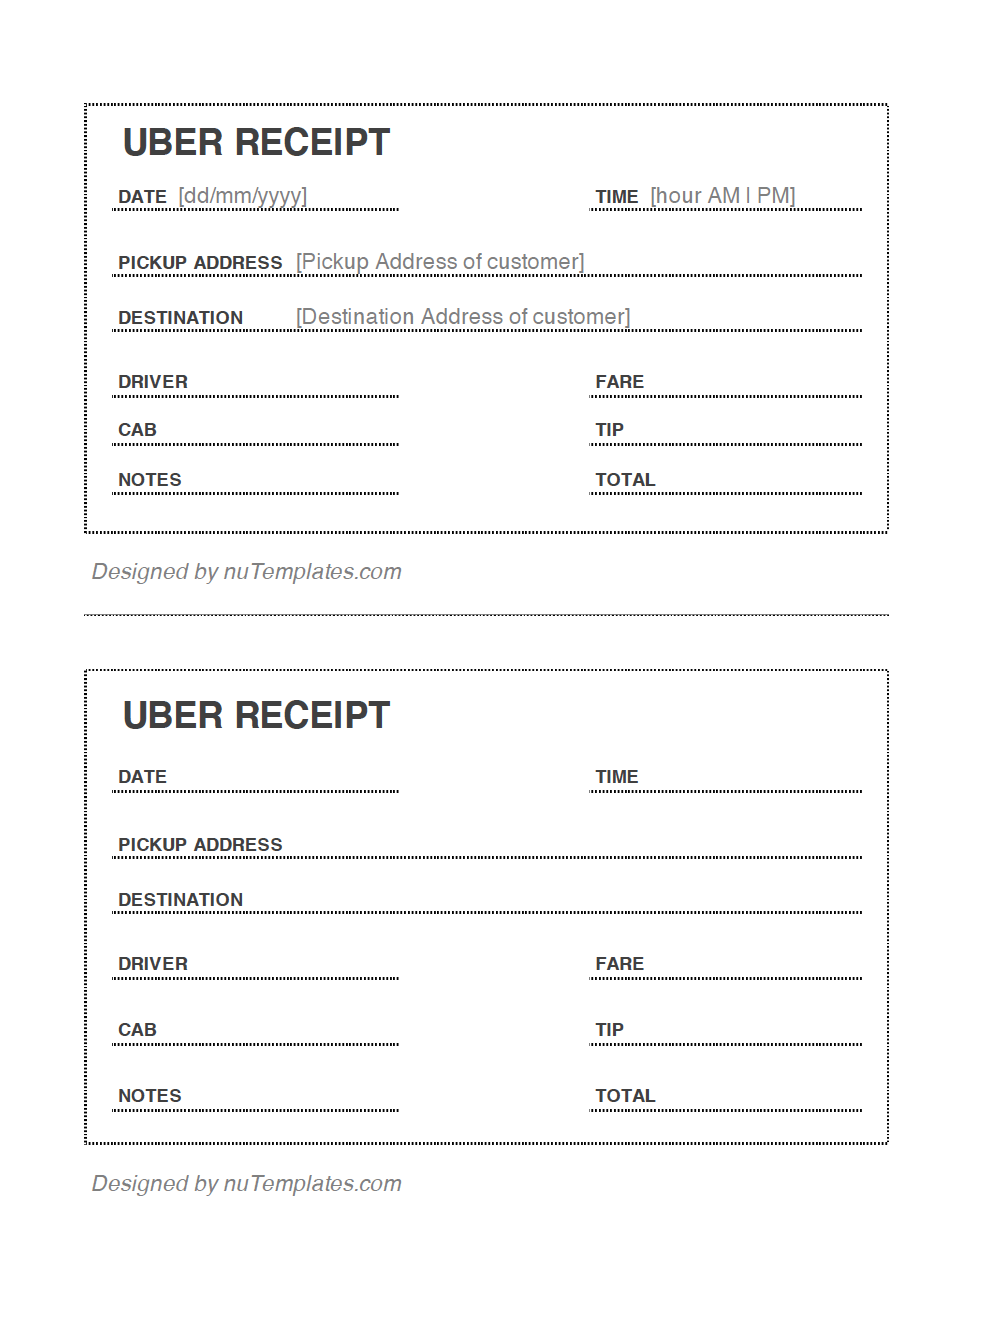 fake uber receipt generator free template nutemplates